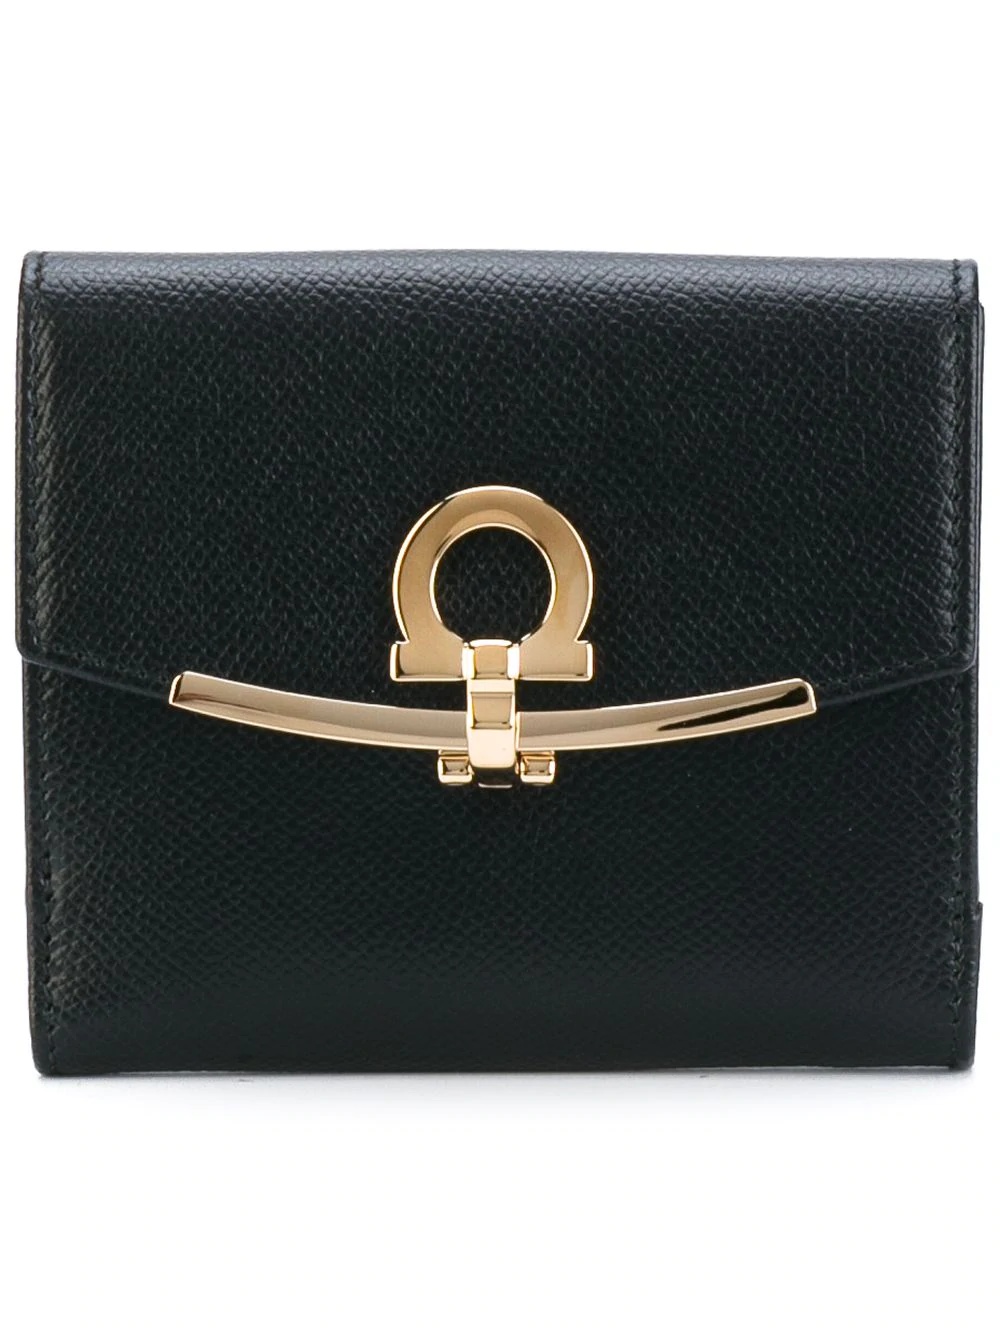 fold-over clasp purse - 1